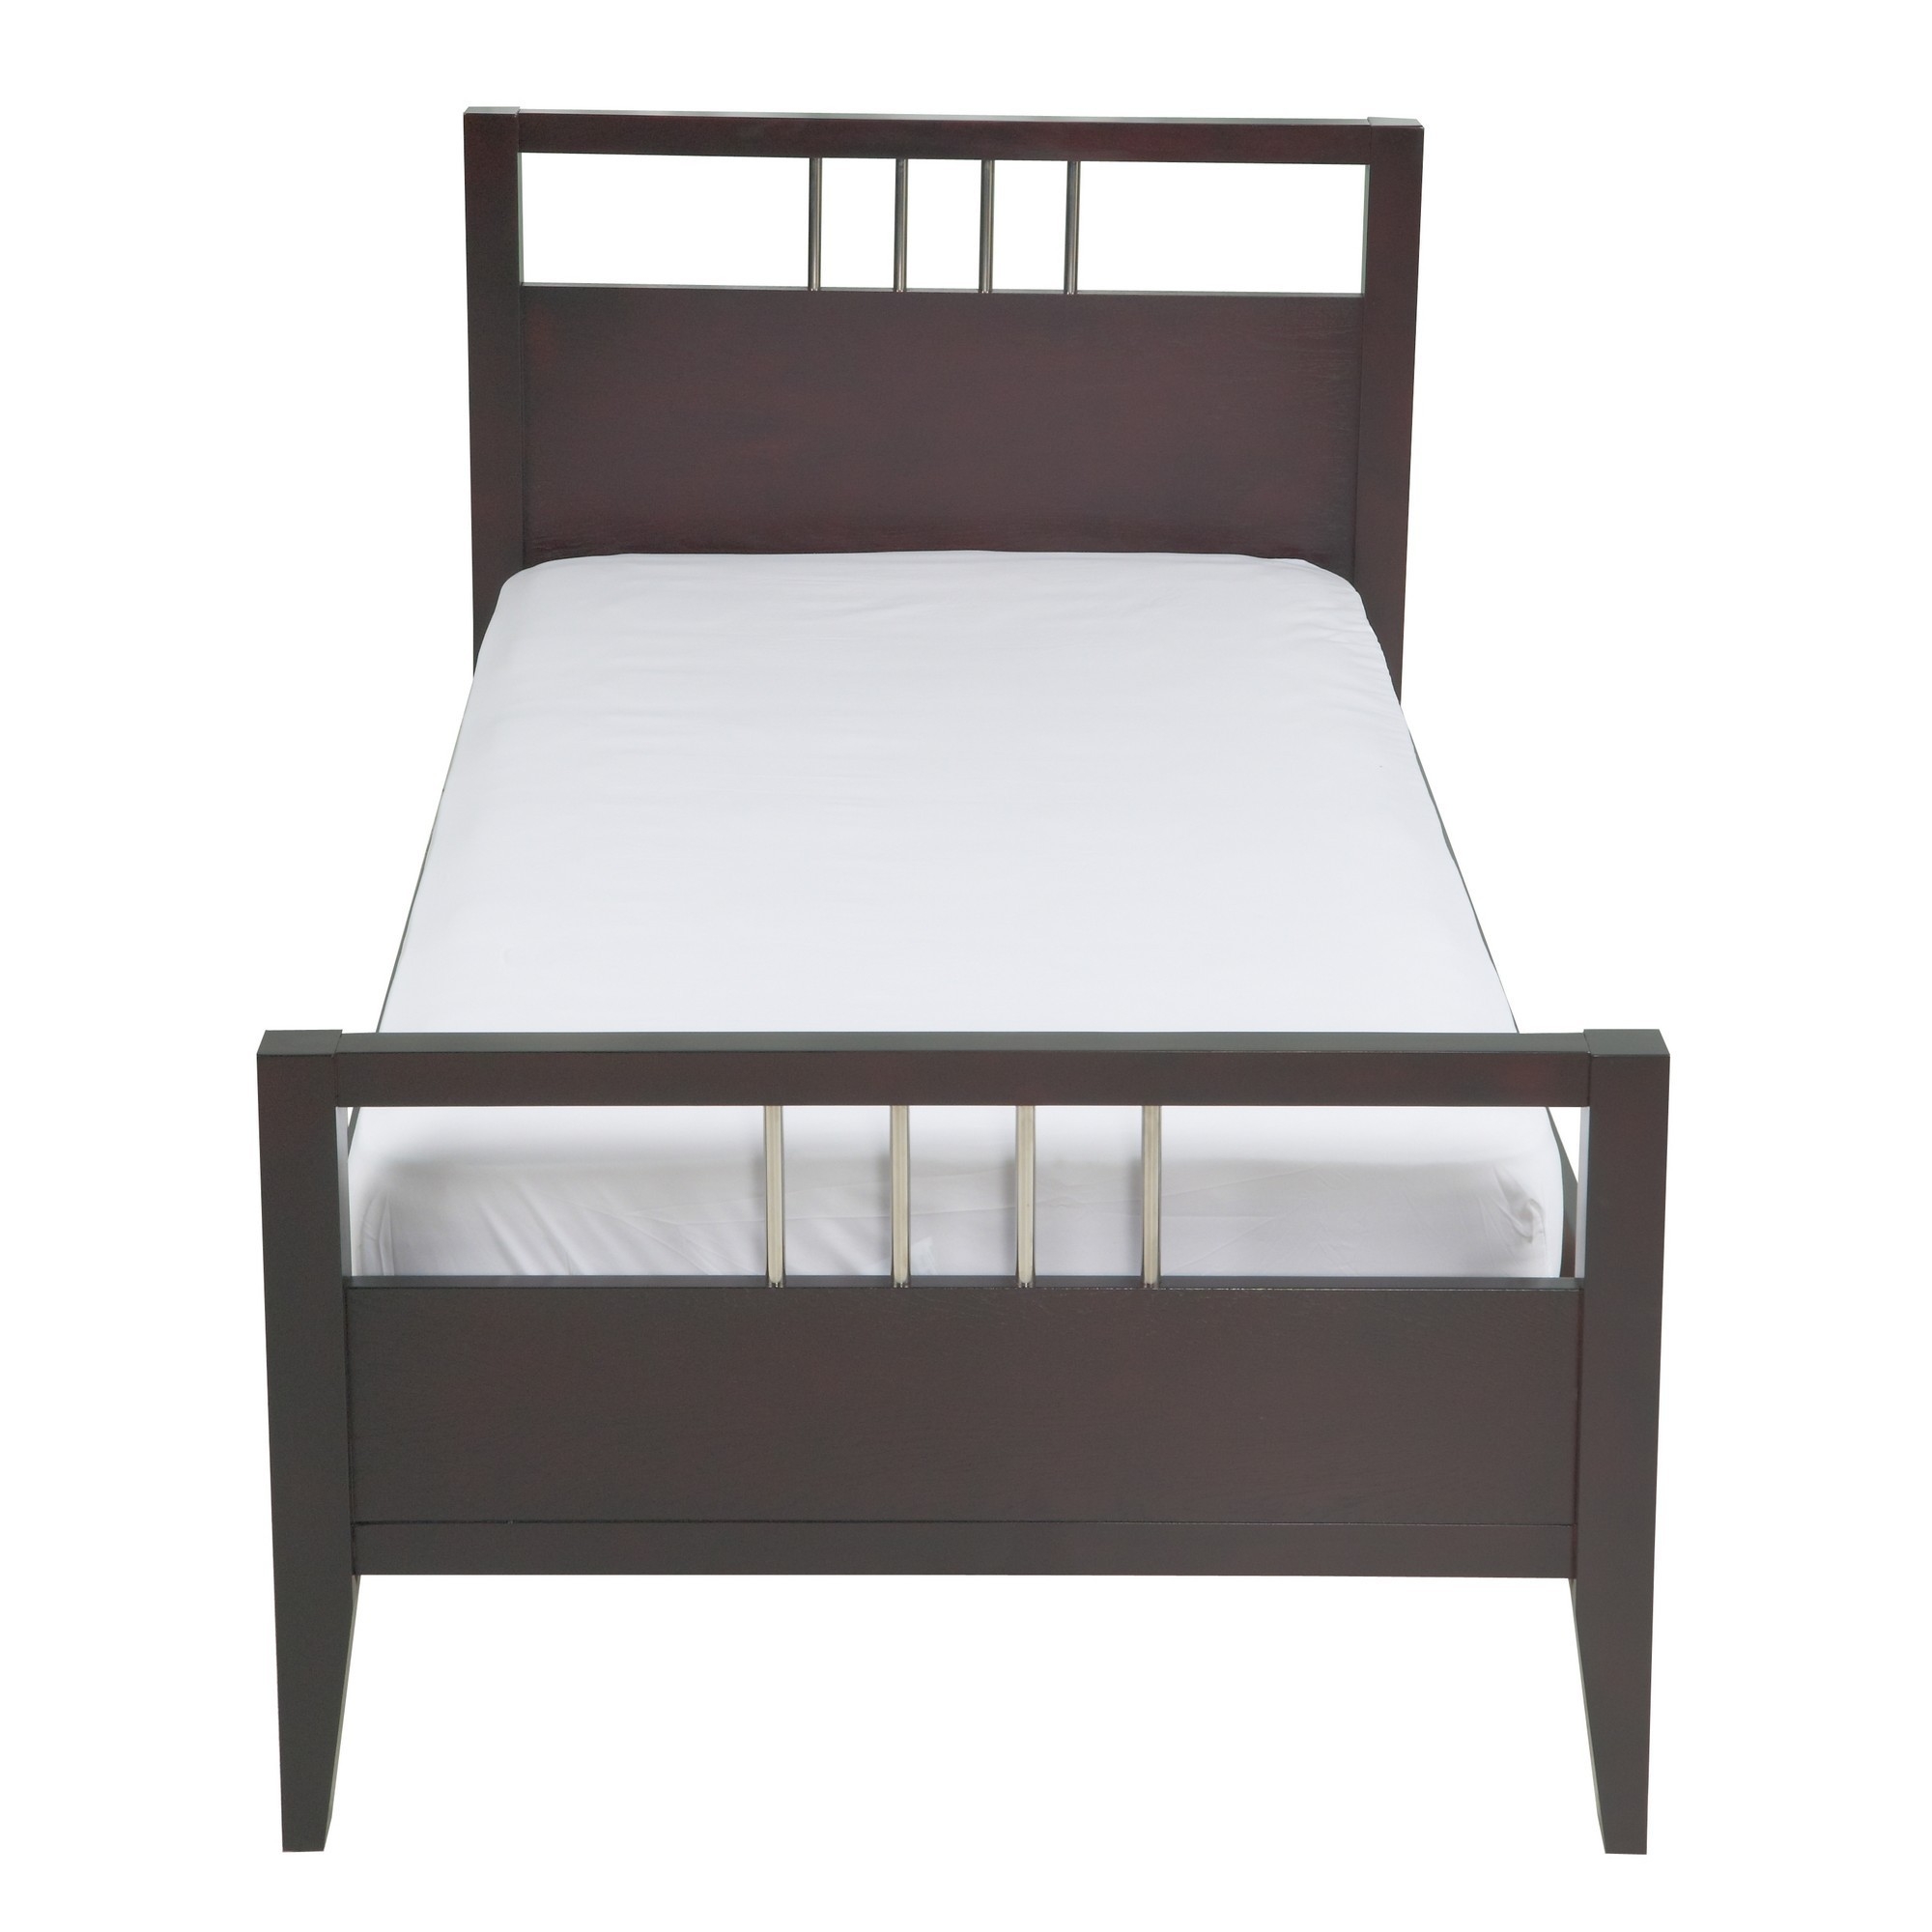 Fang Modern Twin Size Bed, Sleigh Headboard, Metal Bars, Espresso Brown - Saltoro Sherpi